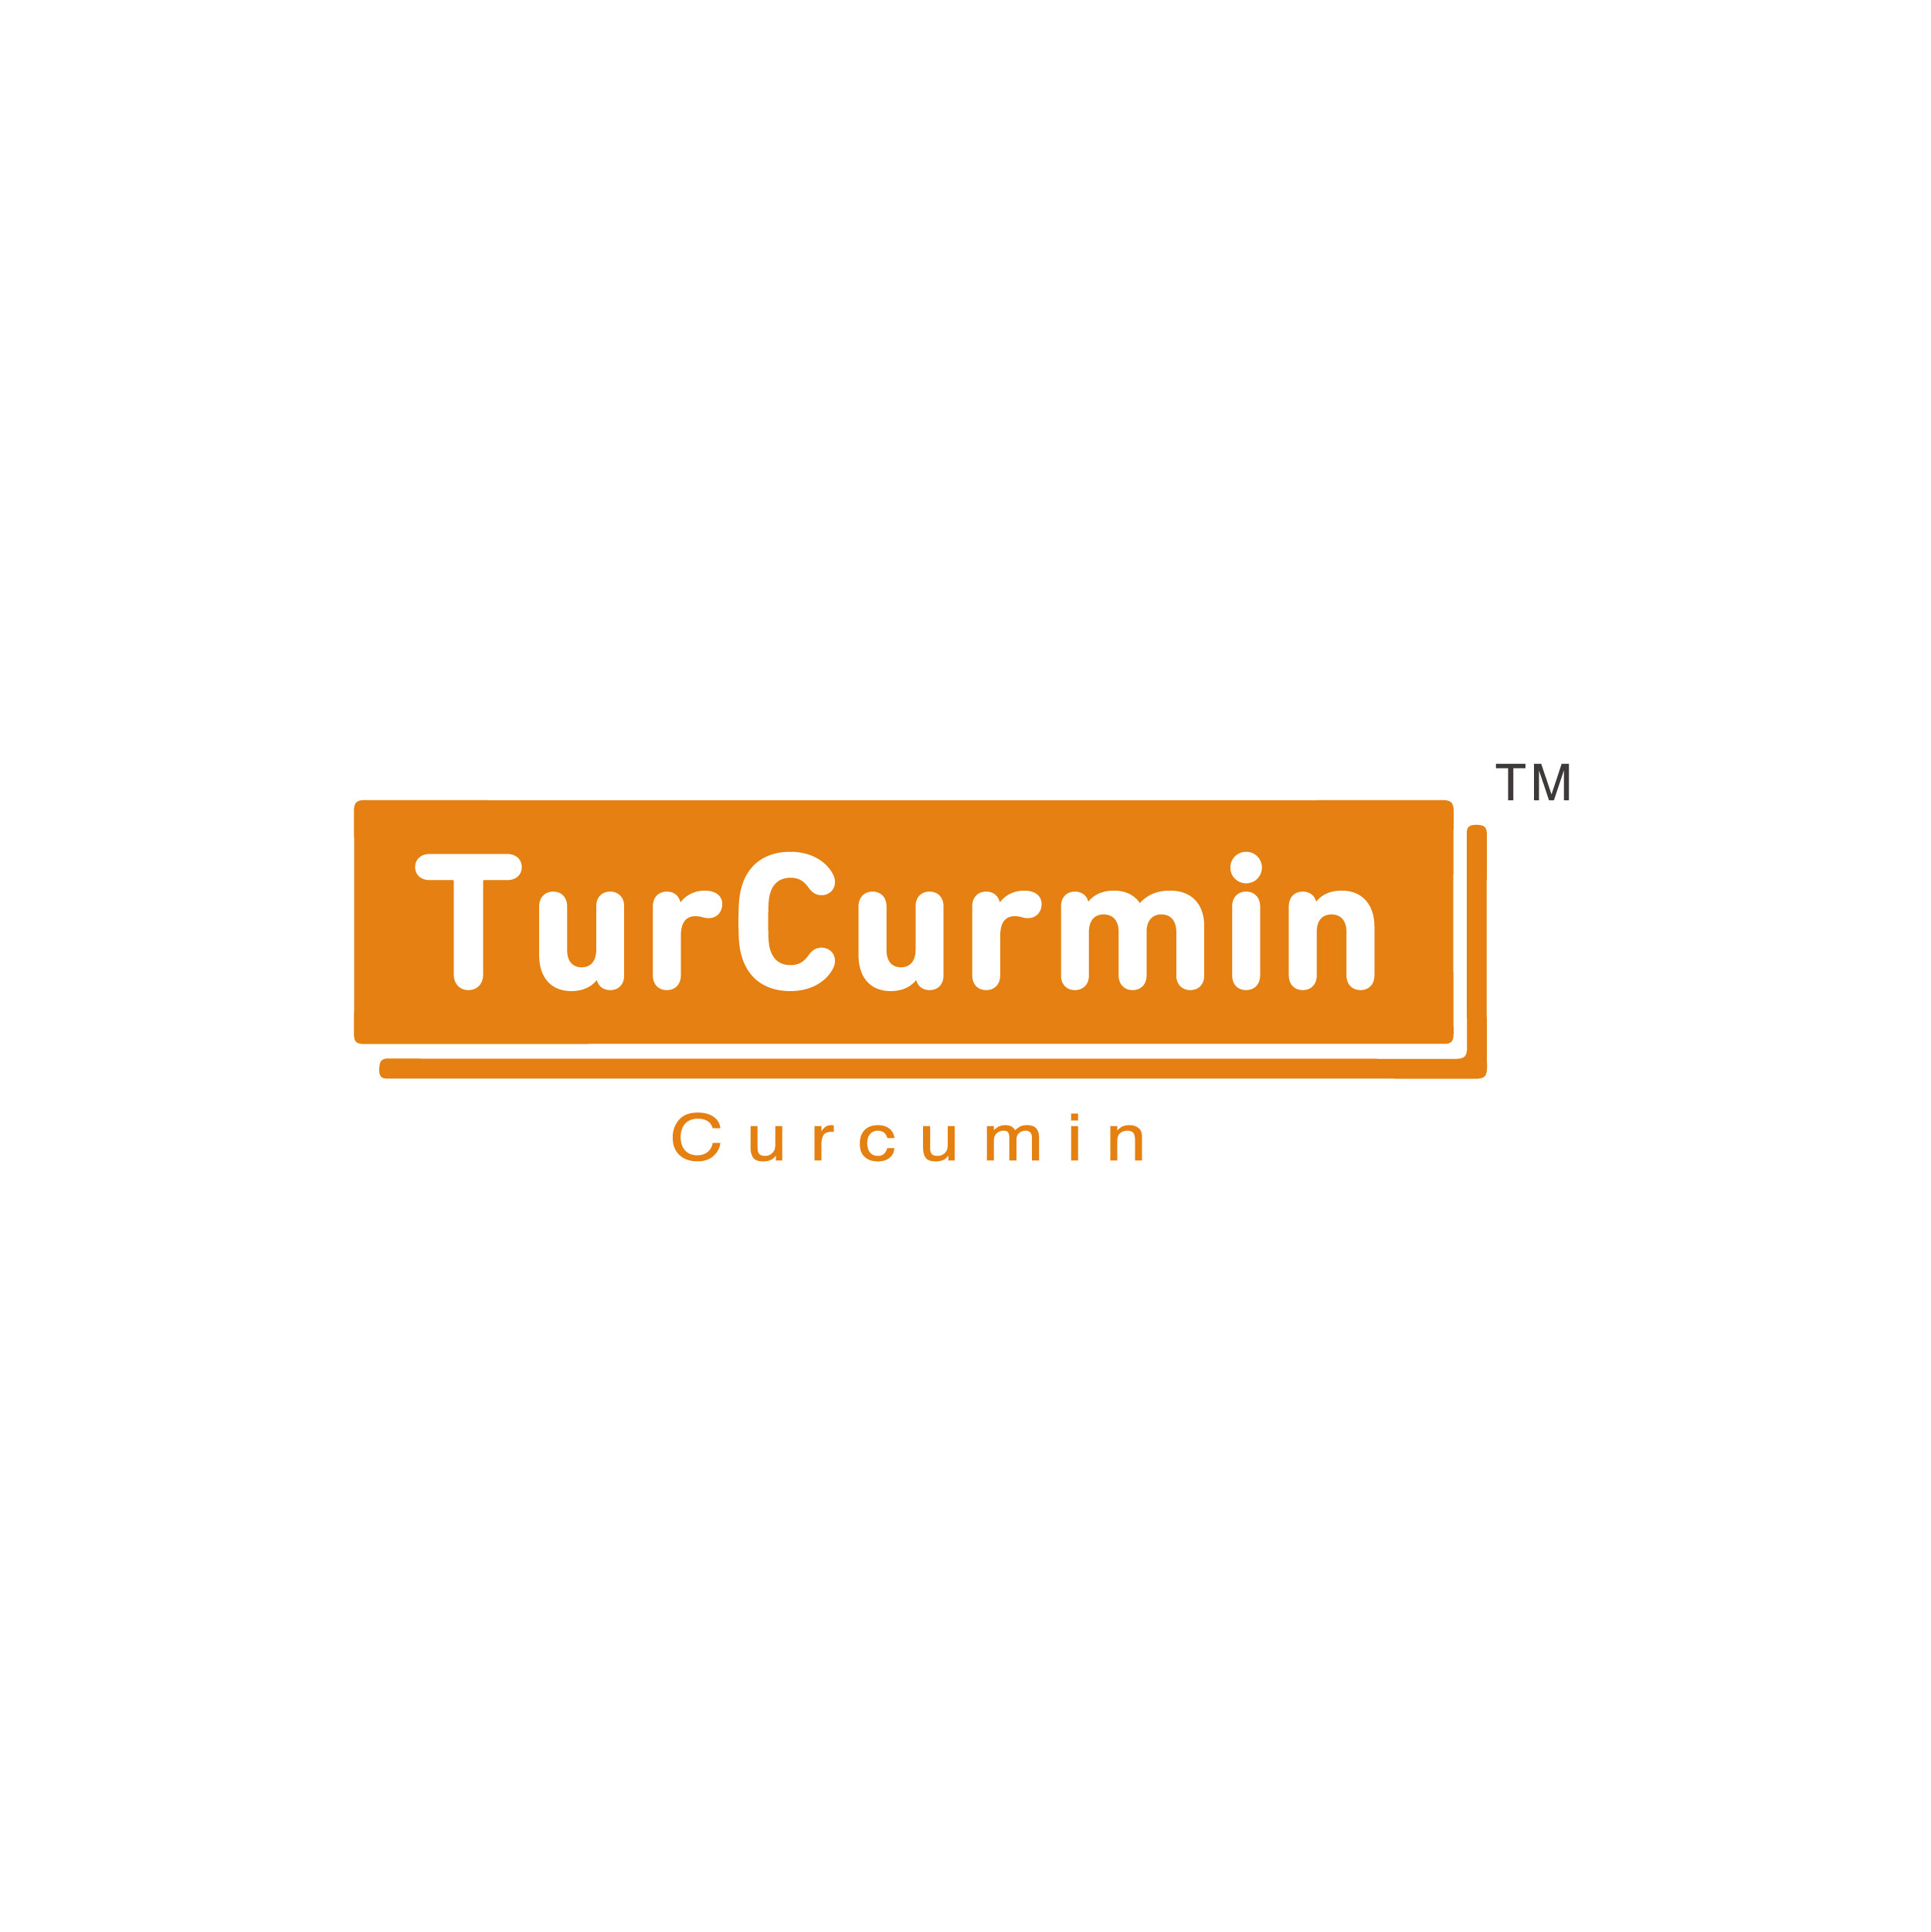 TurCurmin